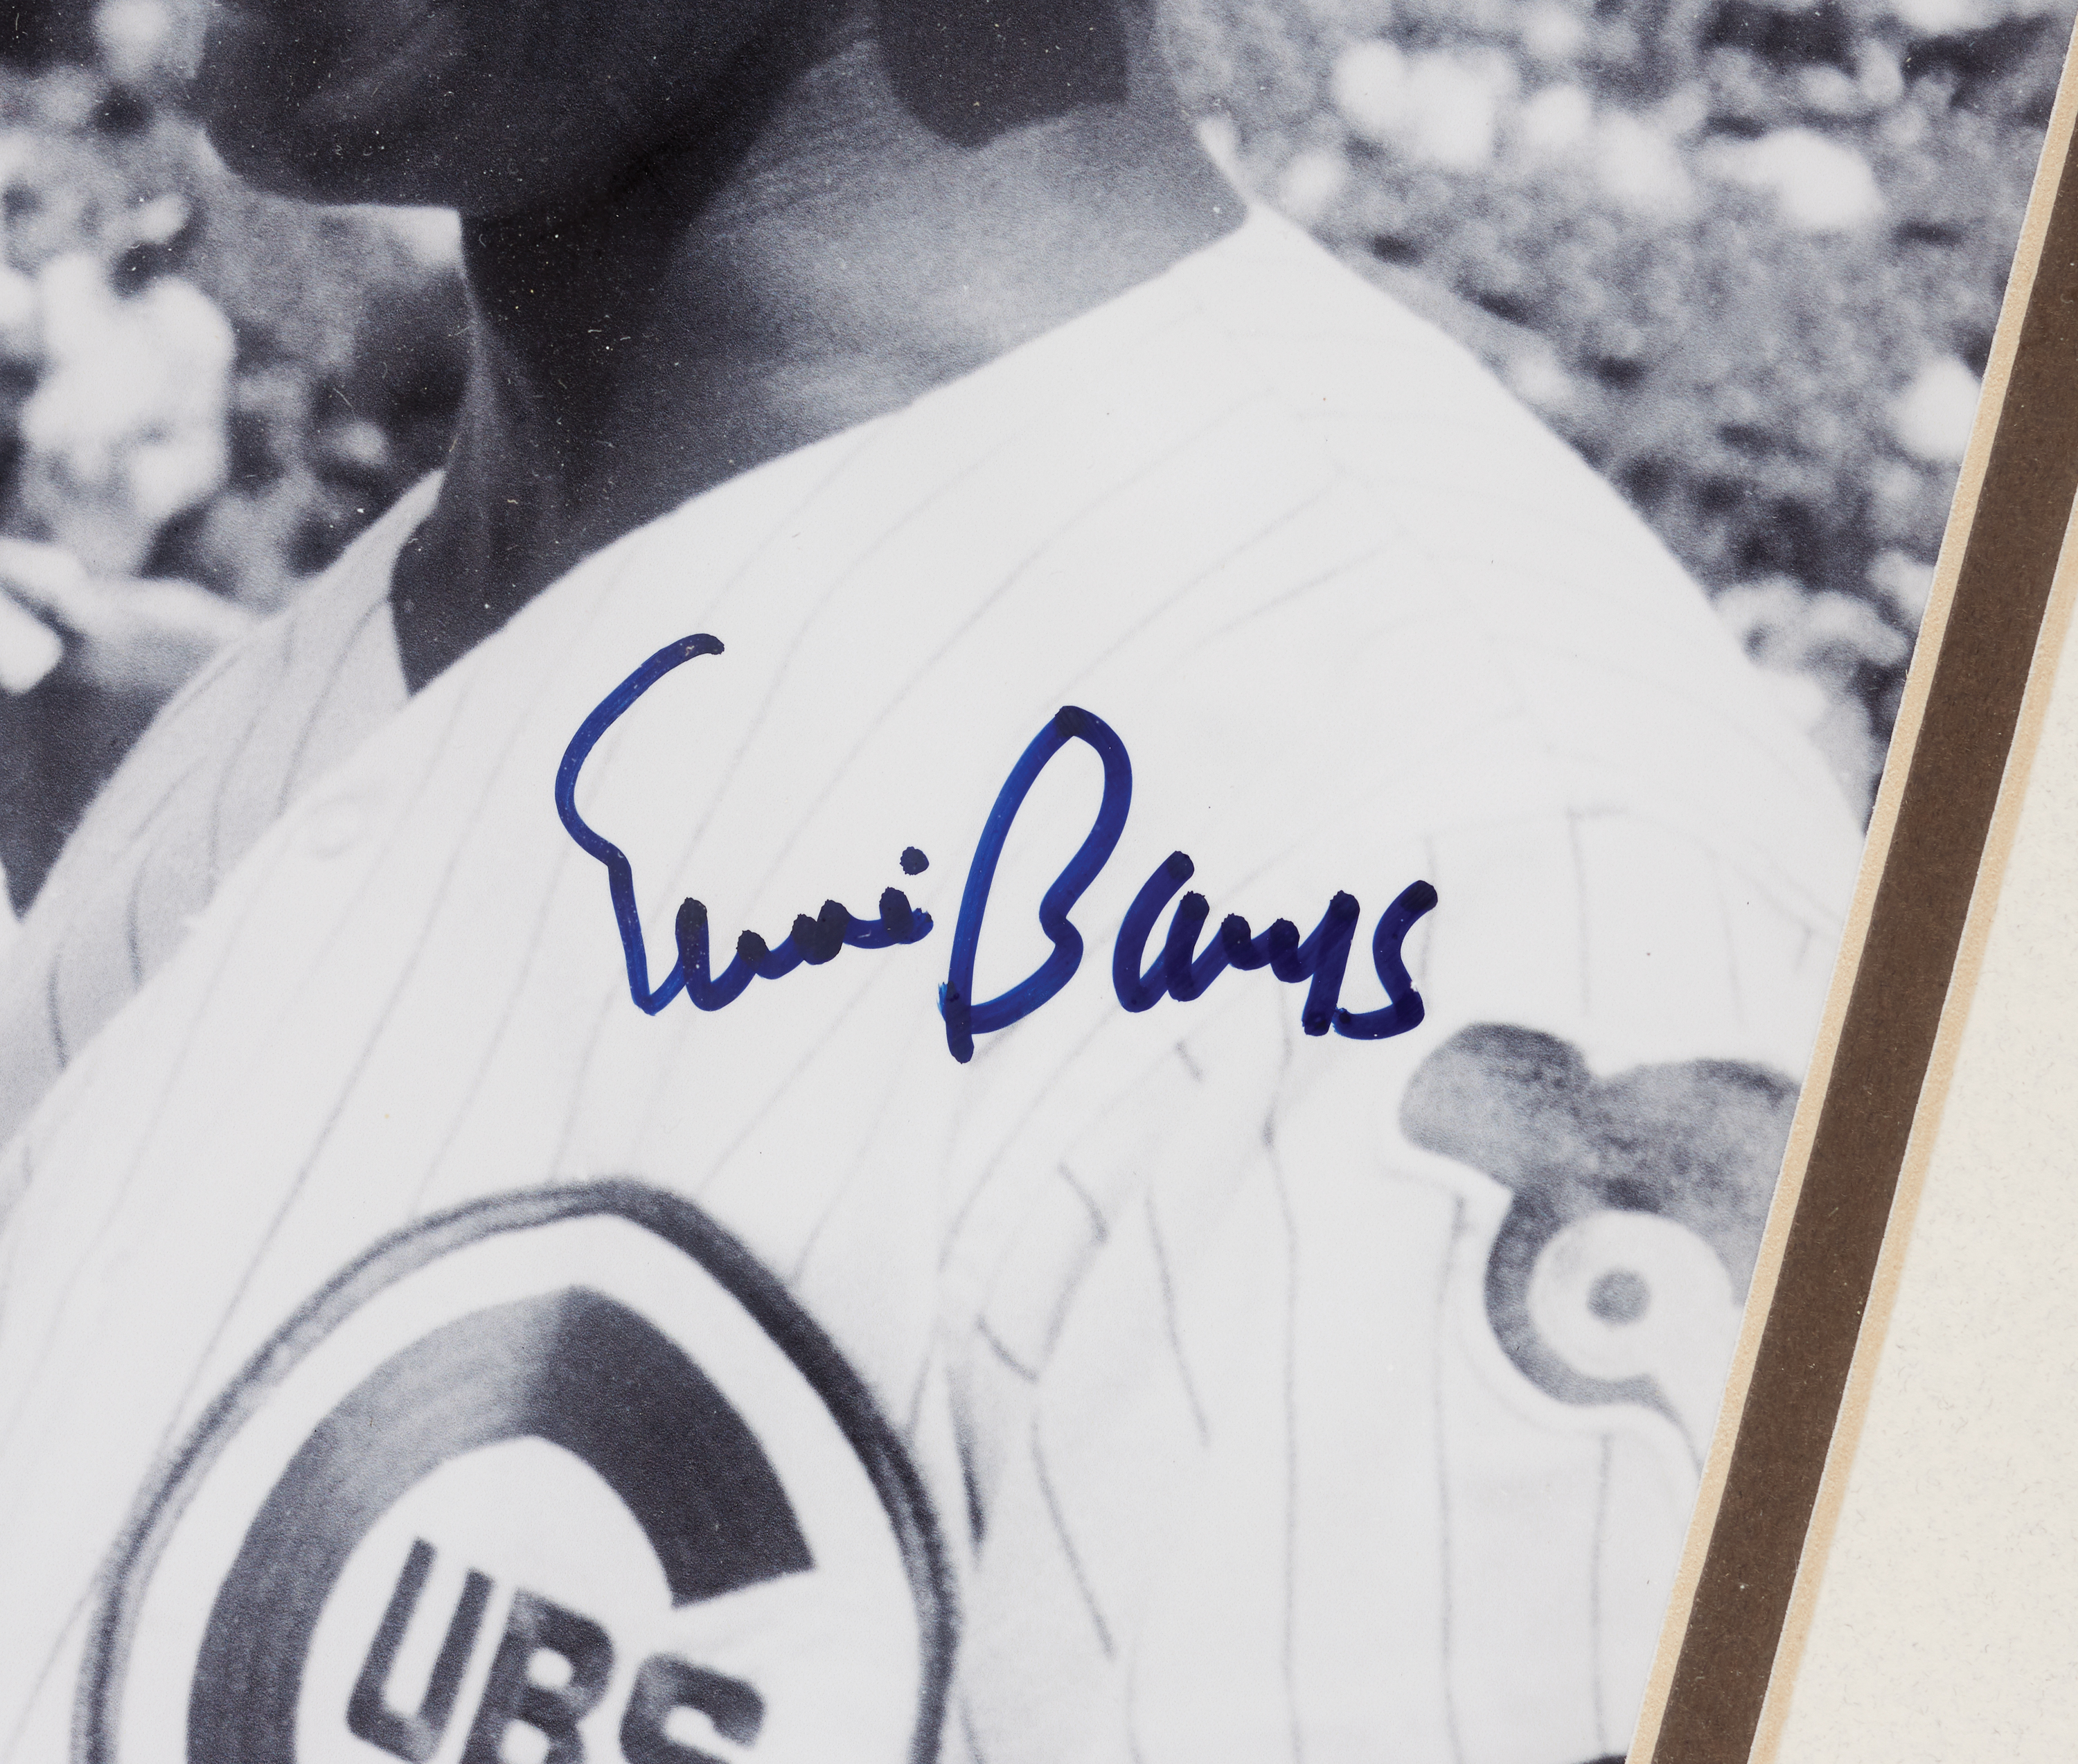 Ernie Banks signing autographs, 1969